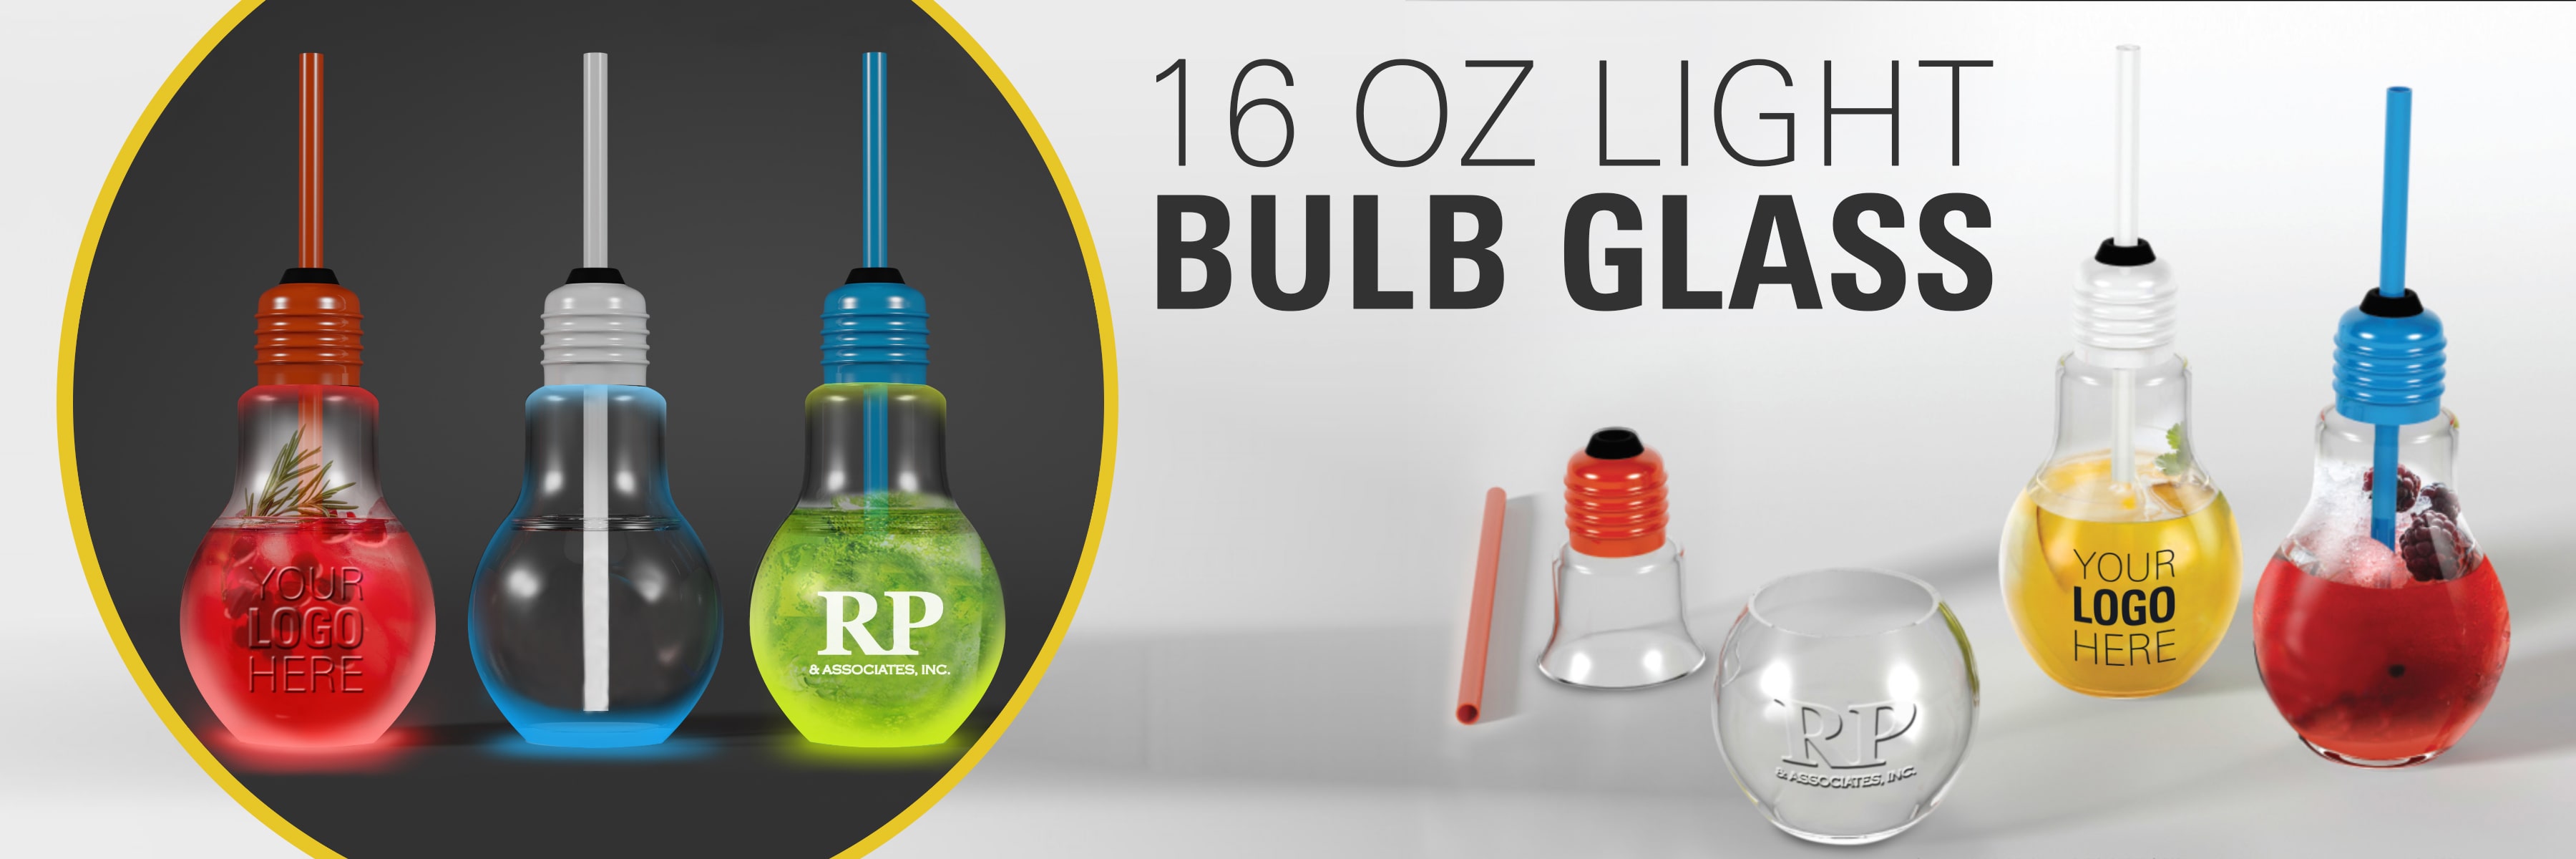 16oz light bulb glass